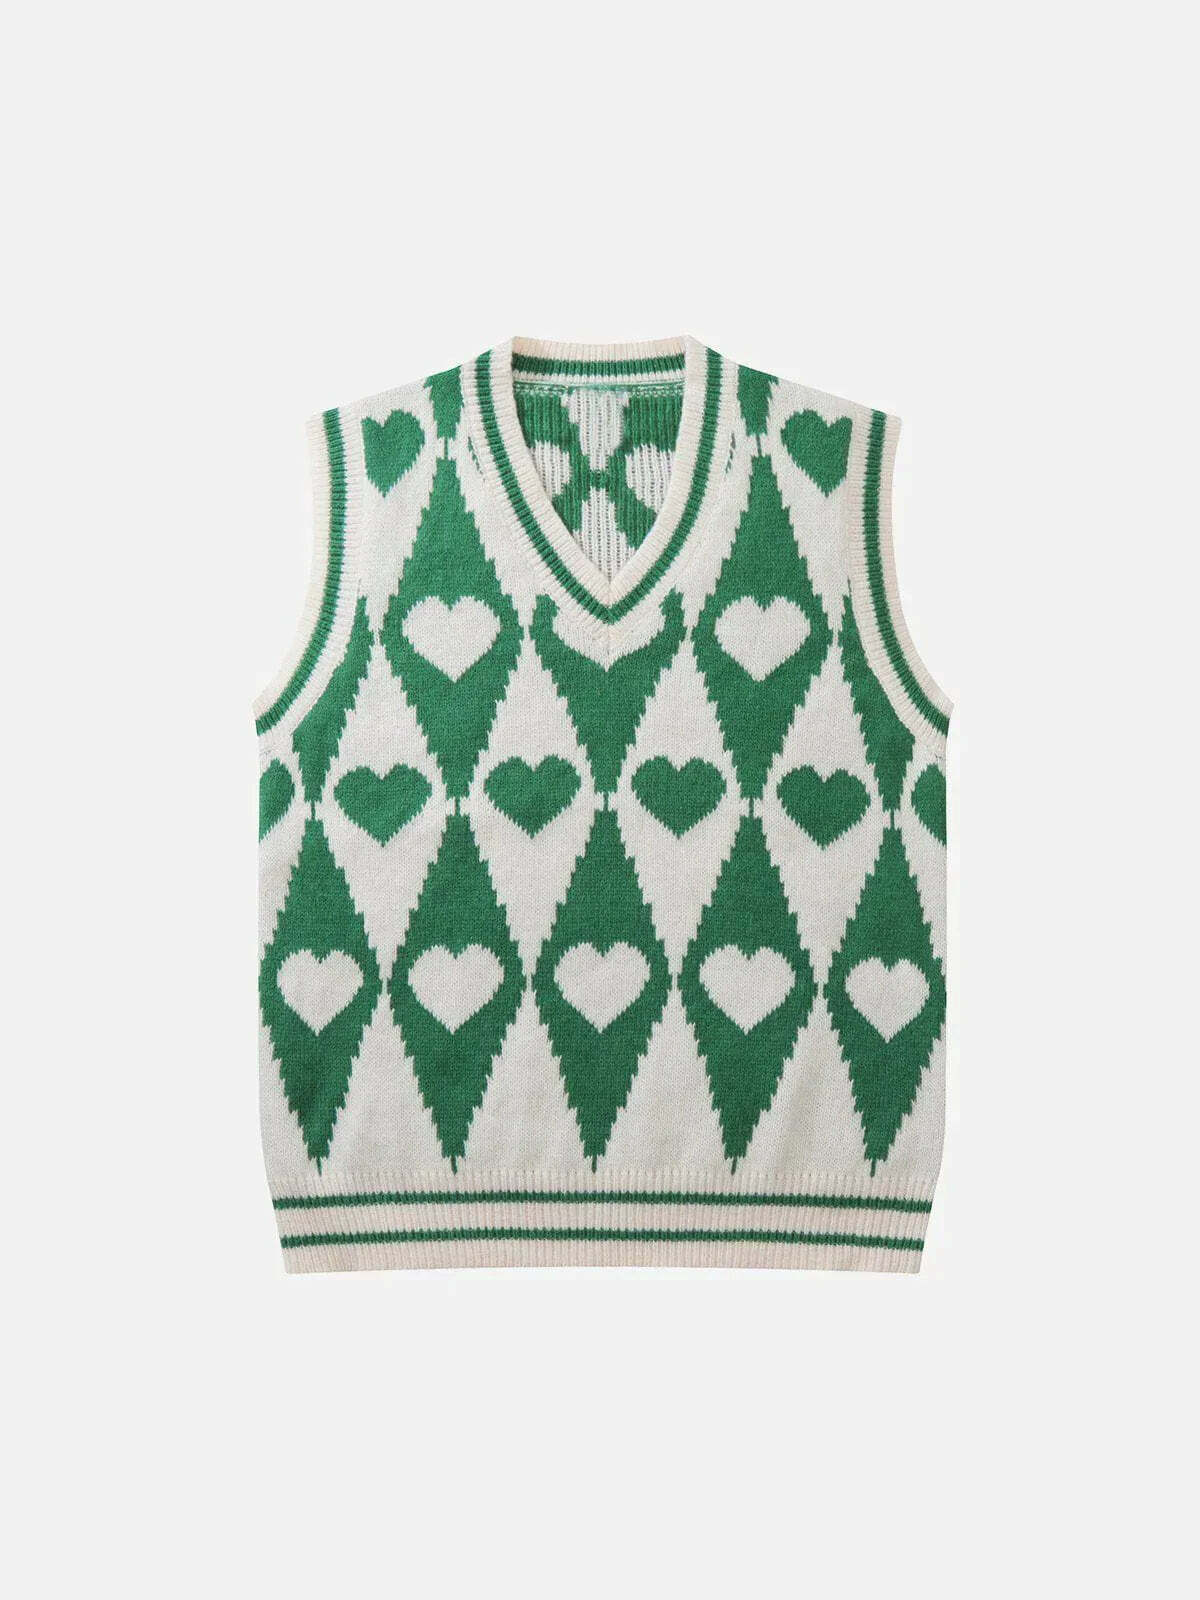 plaid love sweater vest retro quirky y2k style 1021